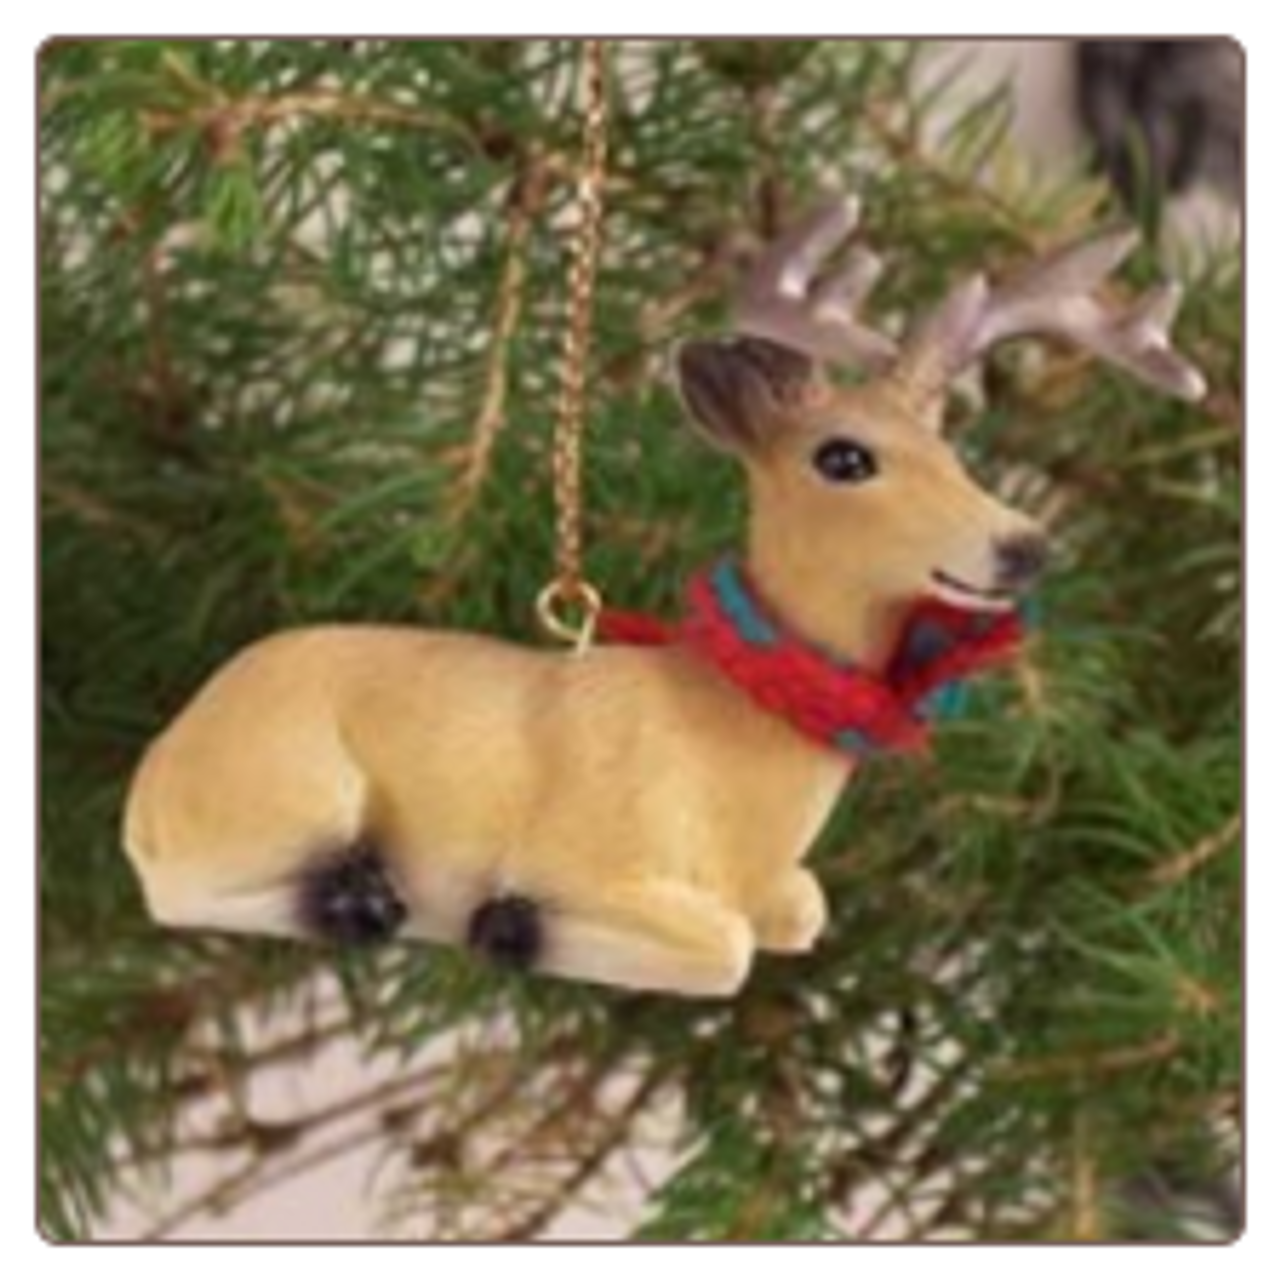 Buck Ornament